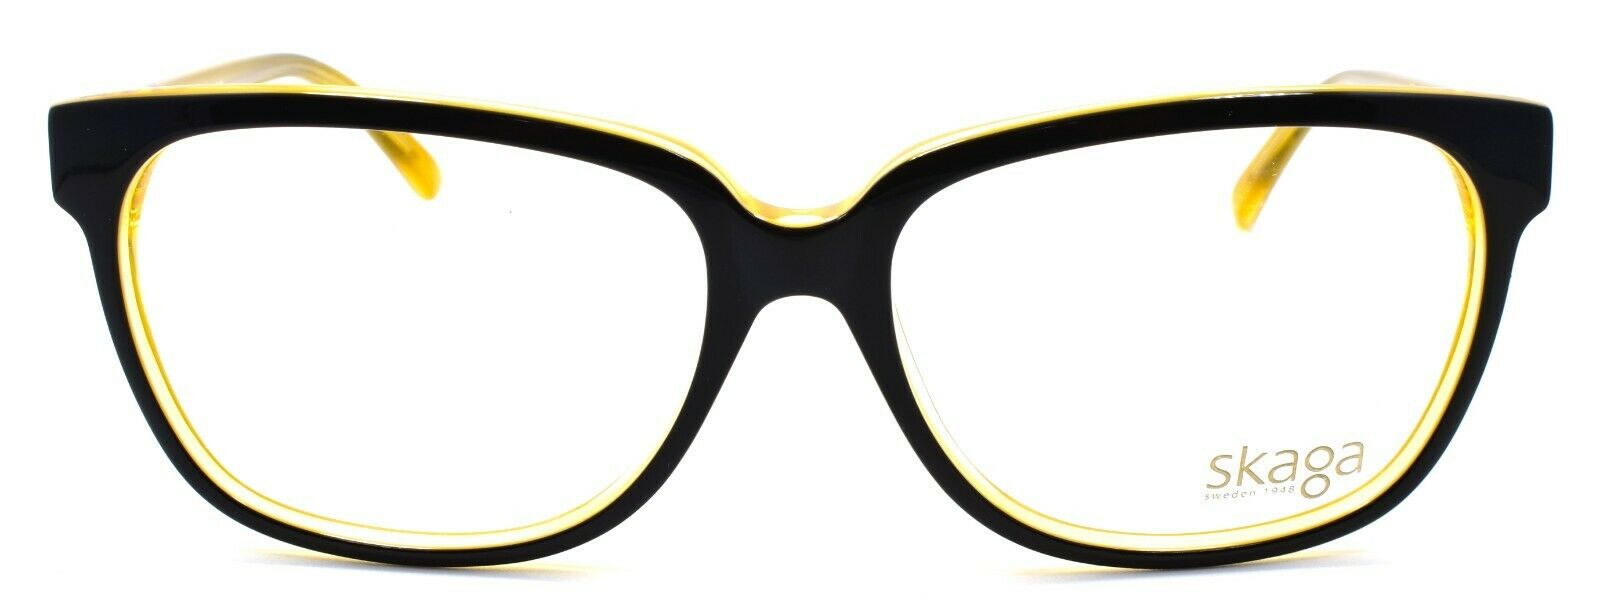 2-Skaga 2474 Anni-Frid 9501 Women's Eyeglasses Frames 54-15-135 Black / Gold-IKSpecs